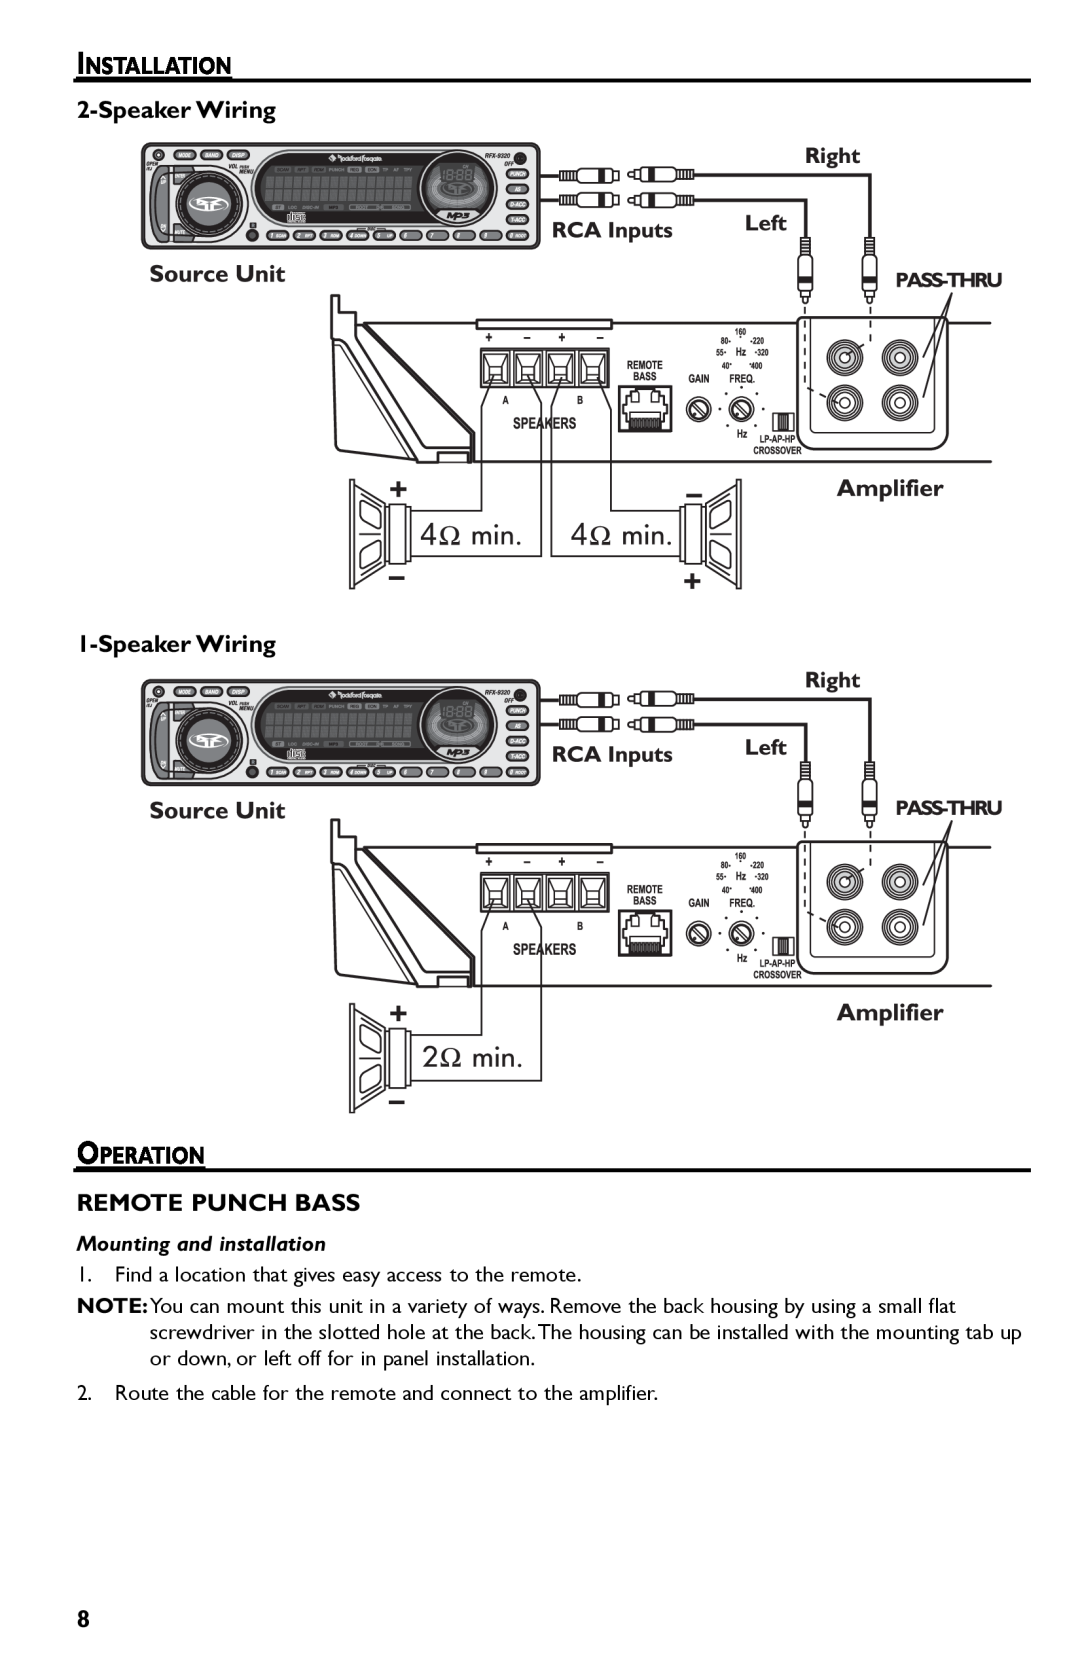 Rockford Fosgate P600..I bd, P325.I manual INSTALLATION 2-SpeakerWiring 1-SpeakerWiring, Operation Remote Punch Bass 